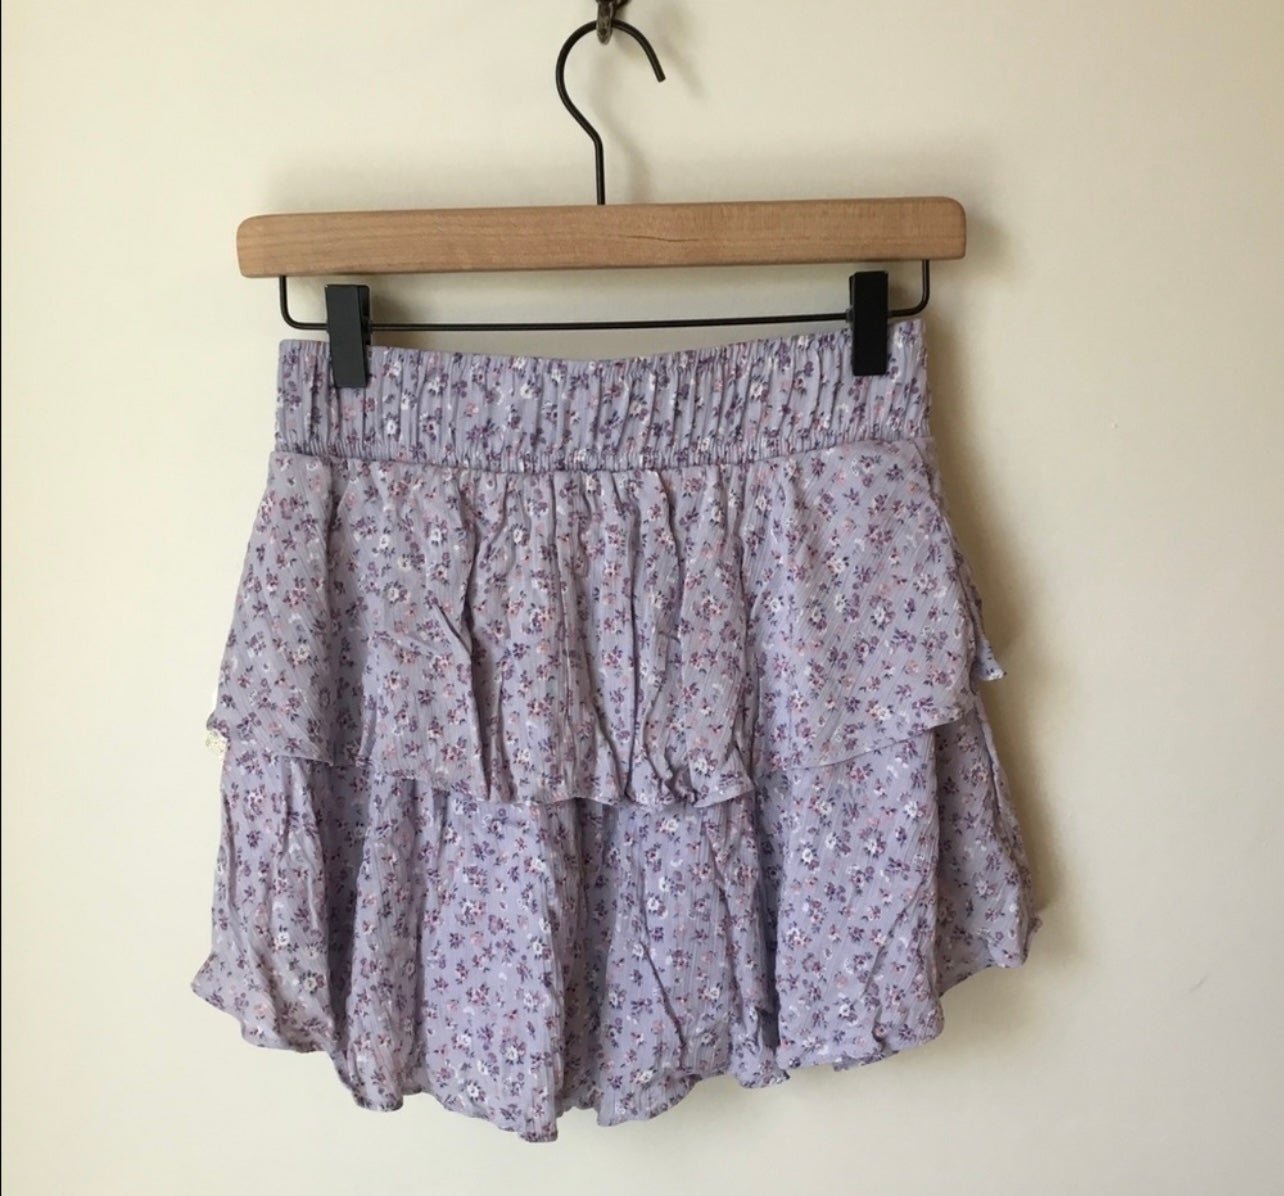 The Best Seller Floral Mini Skirt N97mr0c6g US Sale